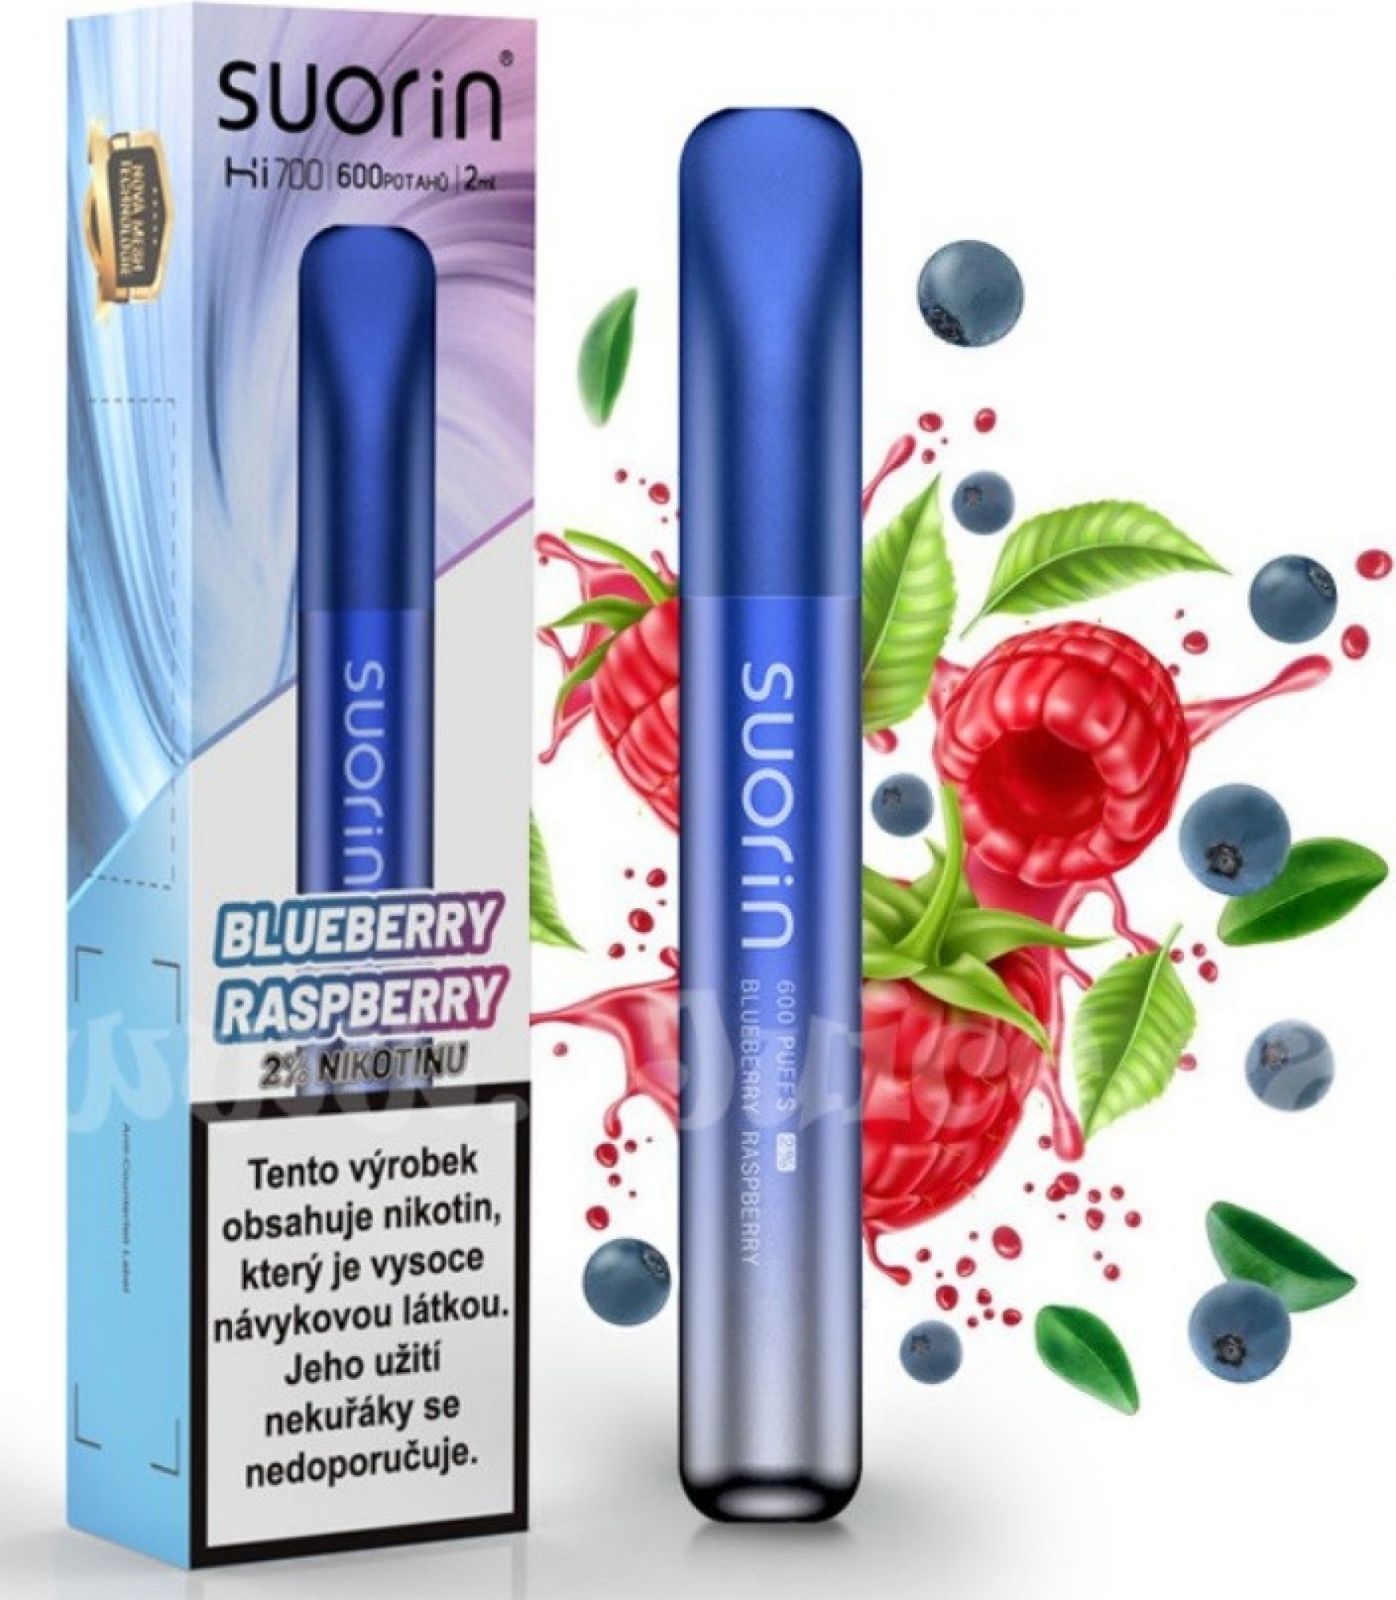 BLUEBERRY RASPBERRY 20mg/ml Nick Salt - Suorin Bar Hi700 - jednorázová e-cigareta